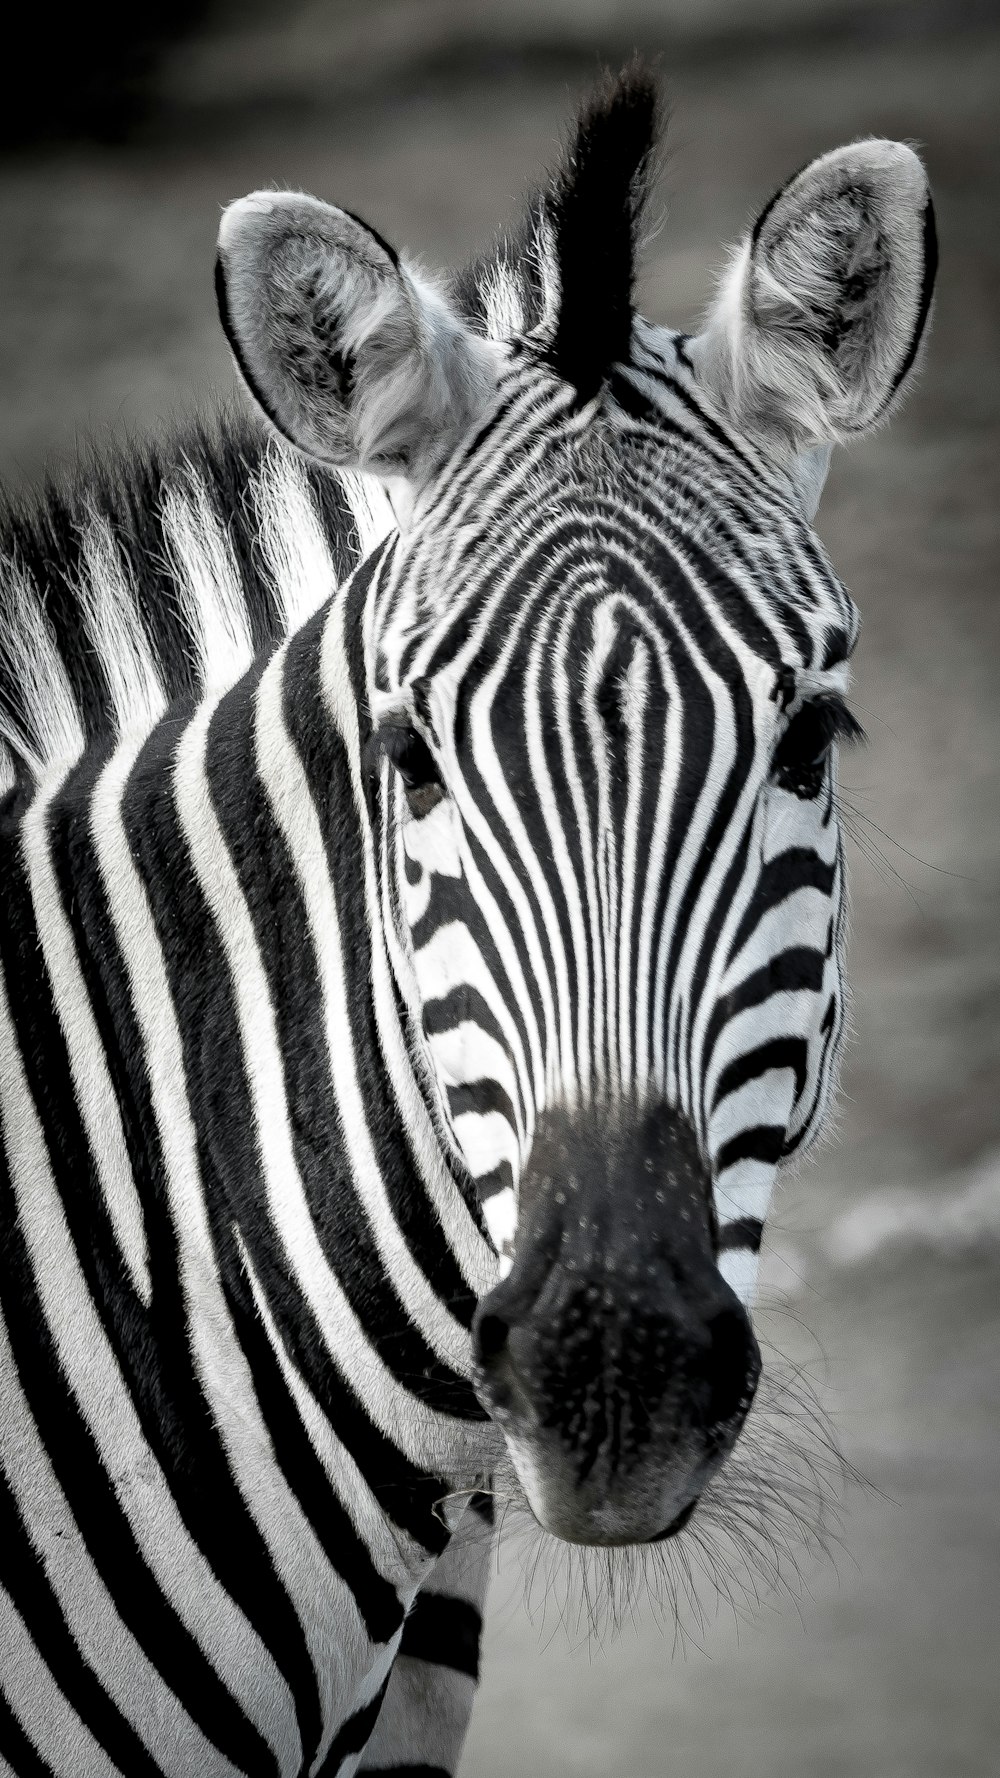 a black and white photo of a zebra